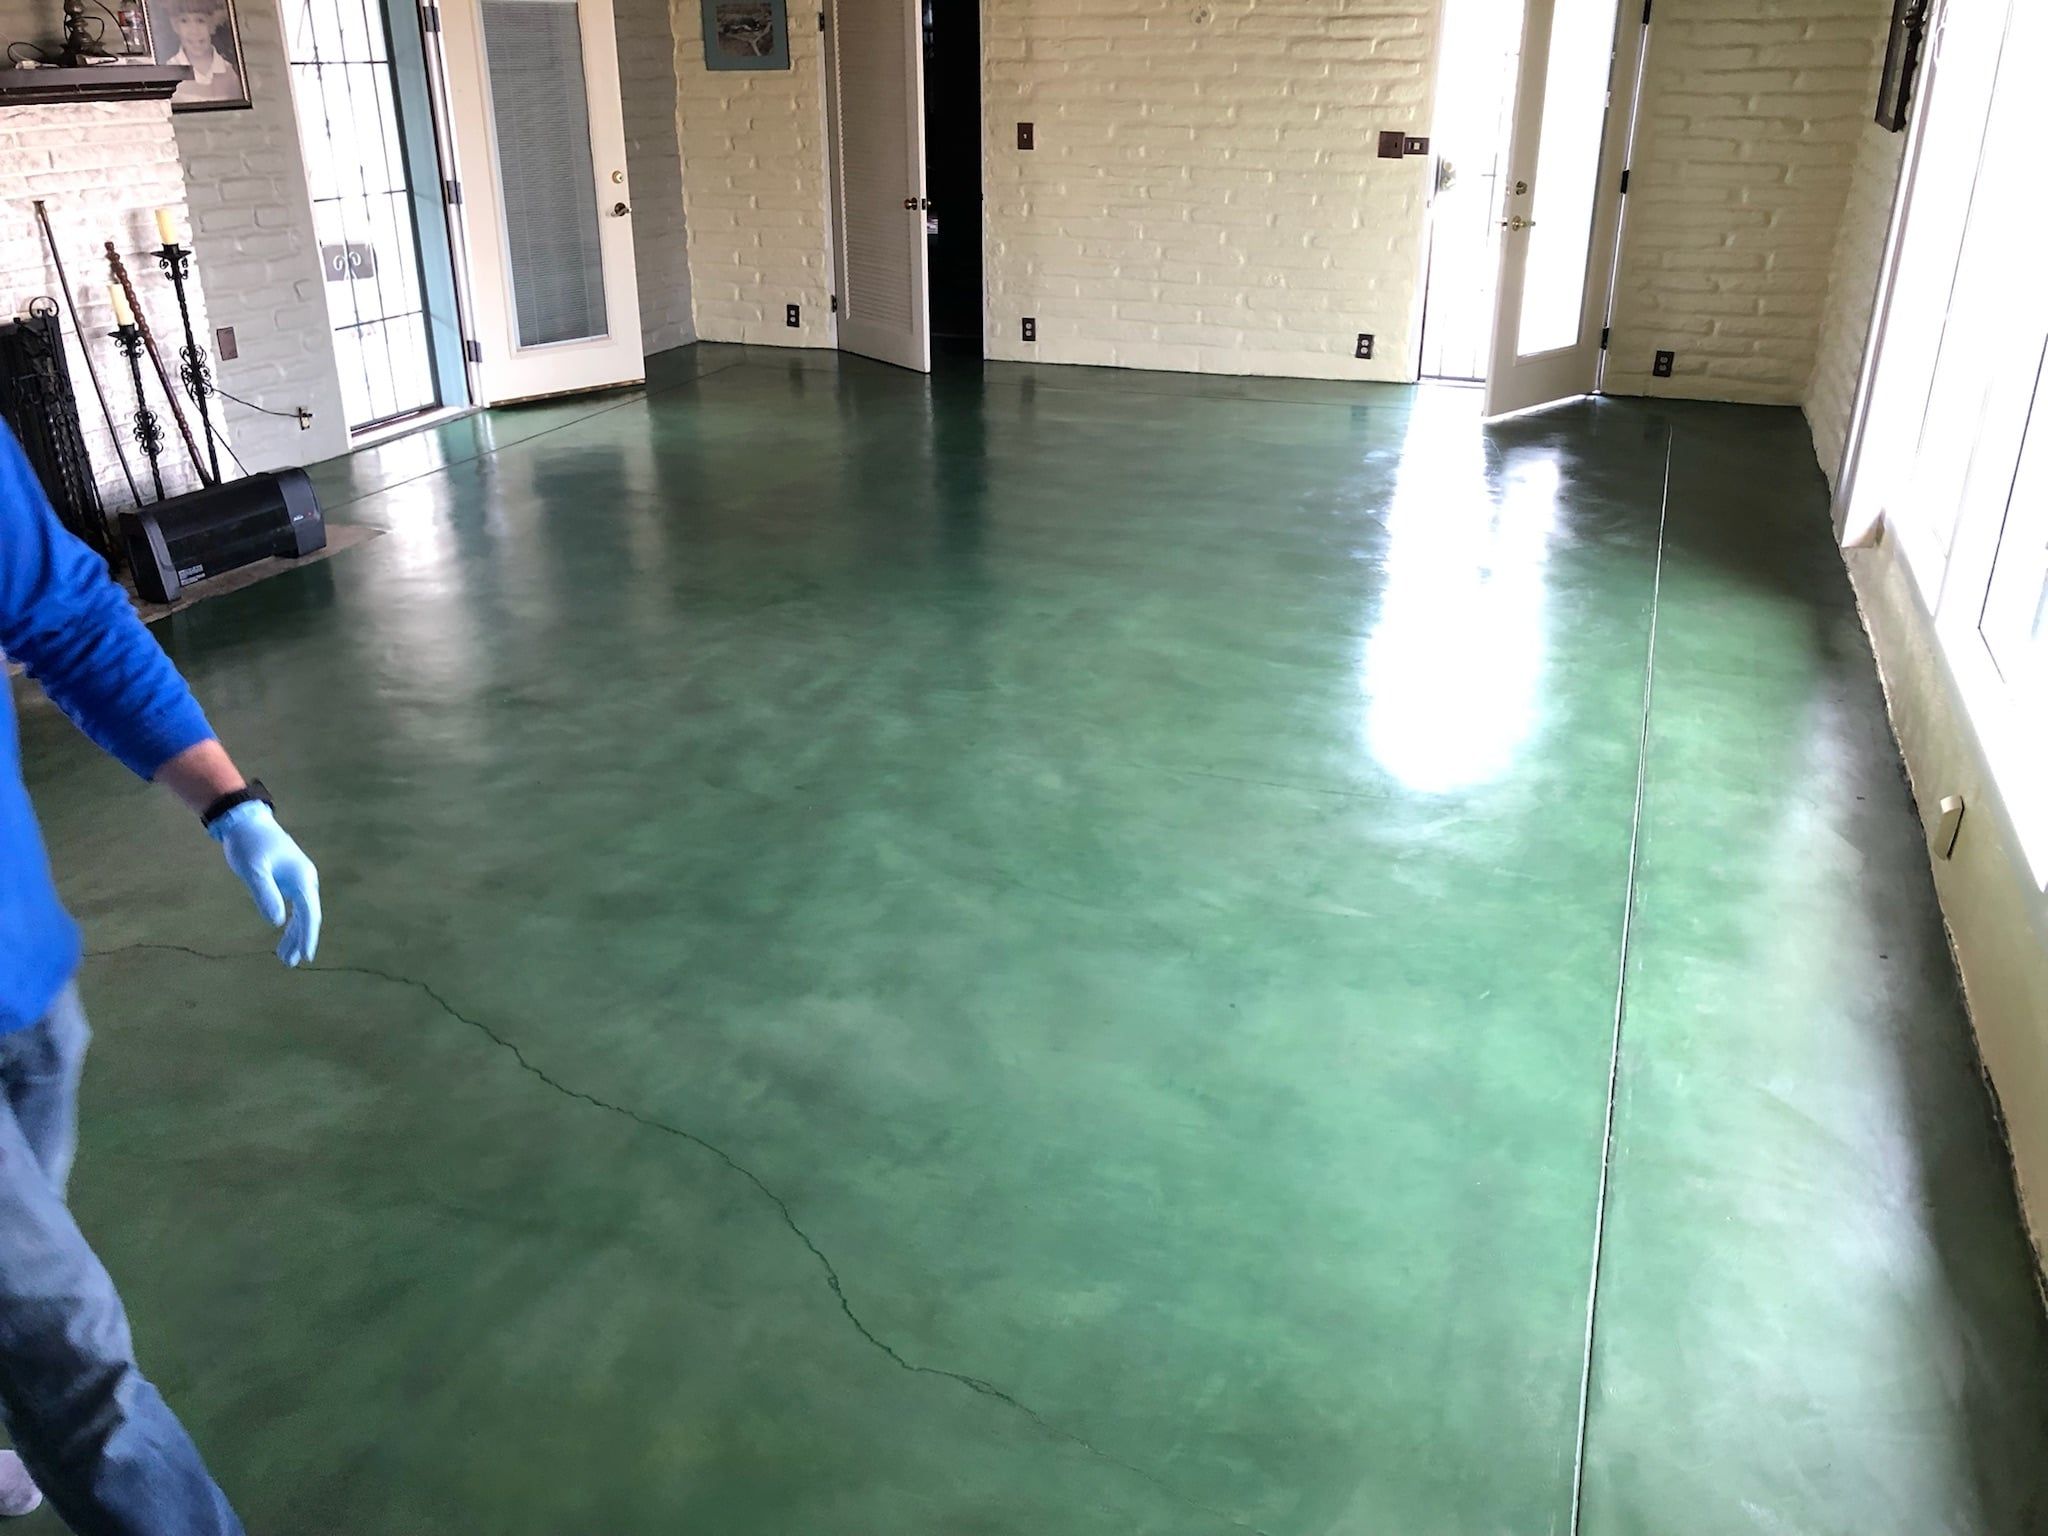 Tile Renaissance Floor polished like new. Beautiful green floor